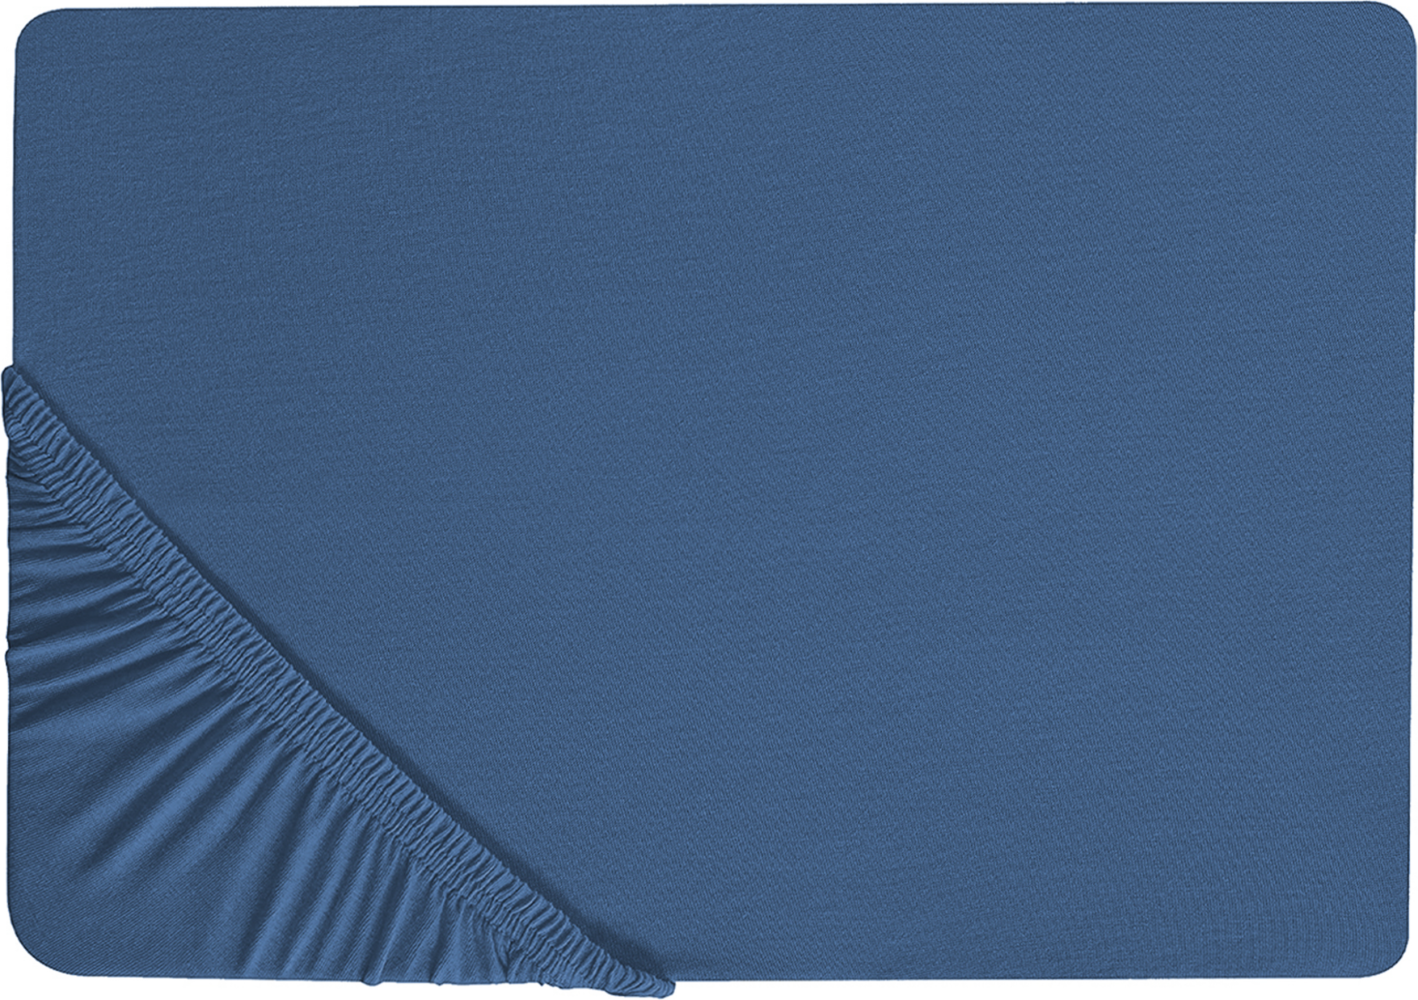 Spannbettlaken Baumwolle marineblau 180 x 200 cm JANBU Bild 1